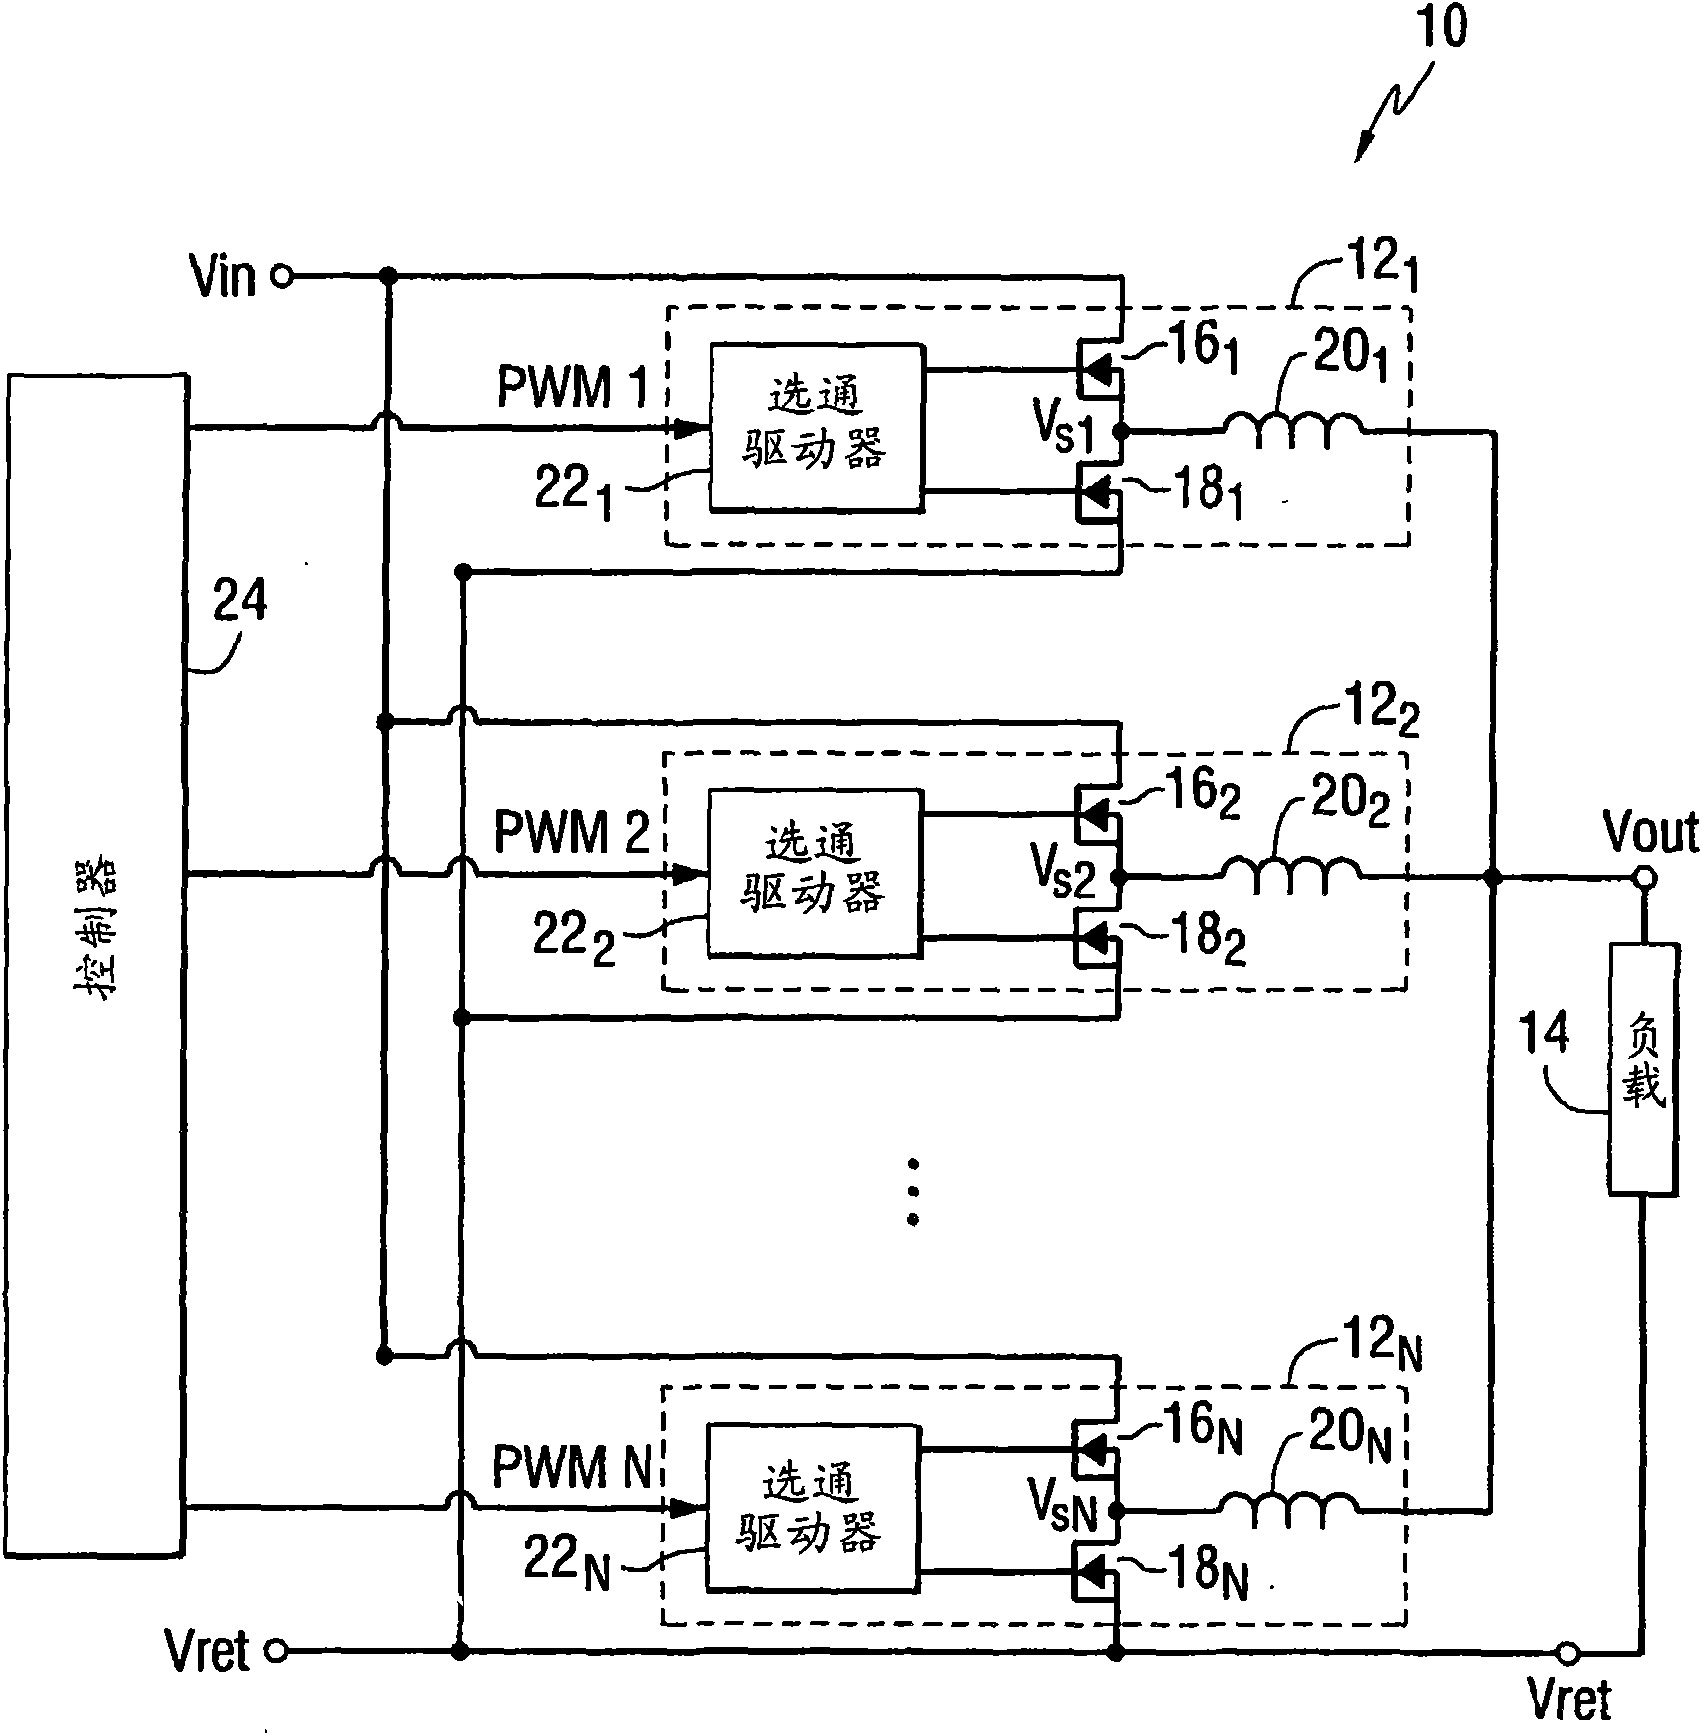 Power supply providing ultrafast modulation of output voltage